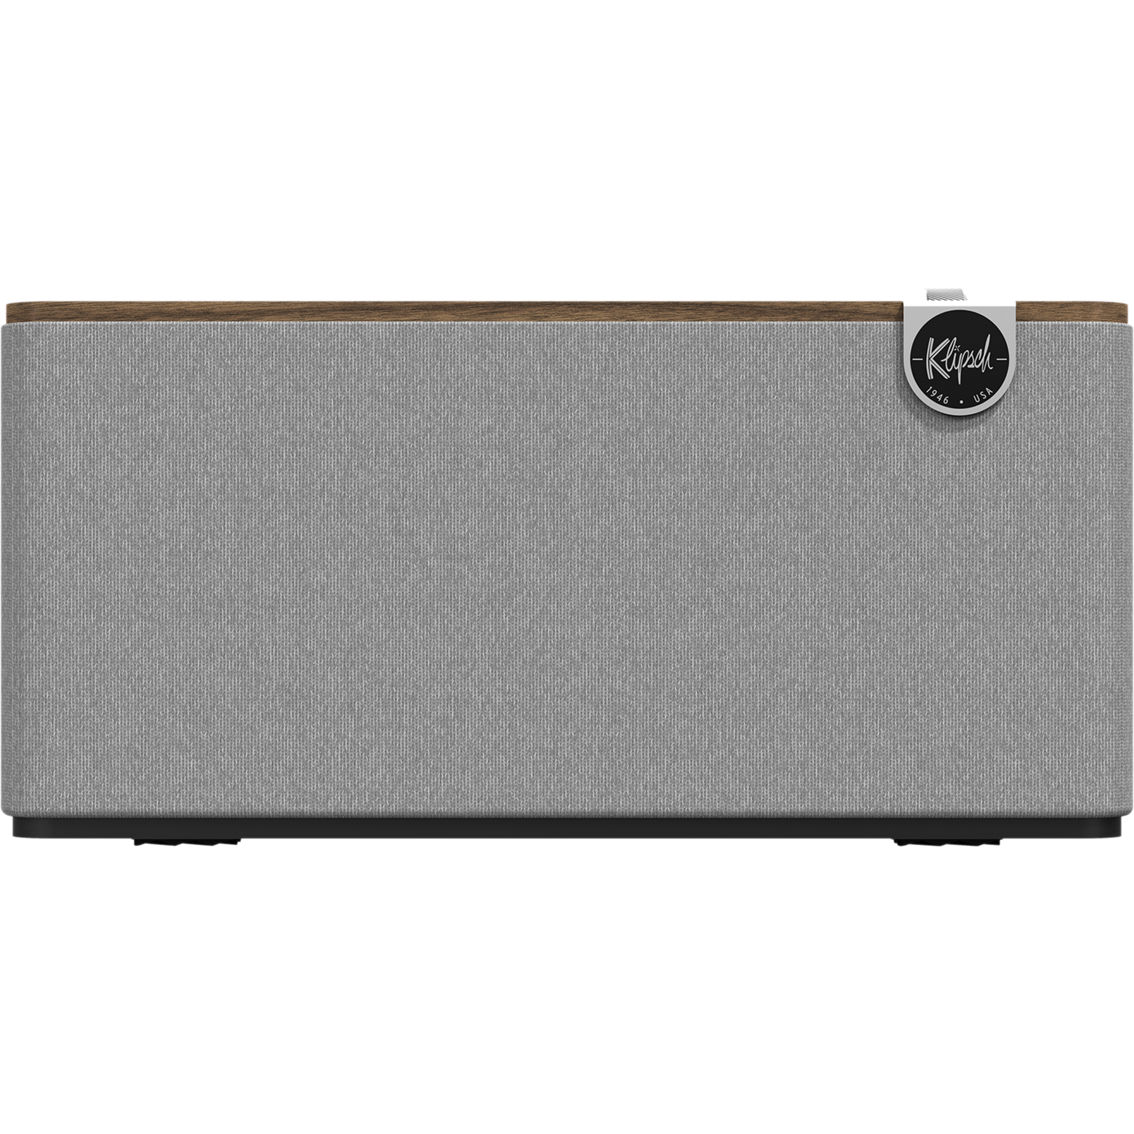 Klipsch One Plus Desk Top Bluetooth Speaker - Image 2 of 3